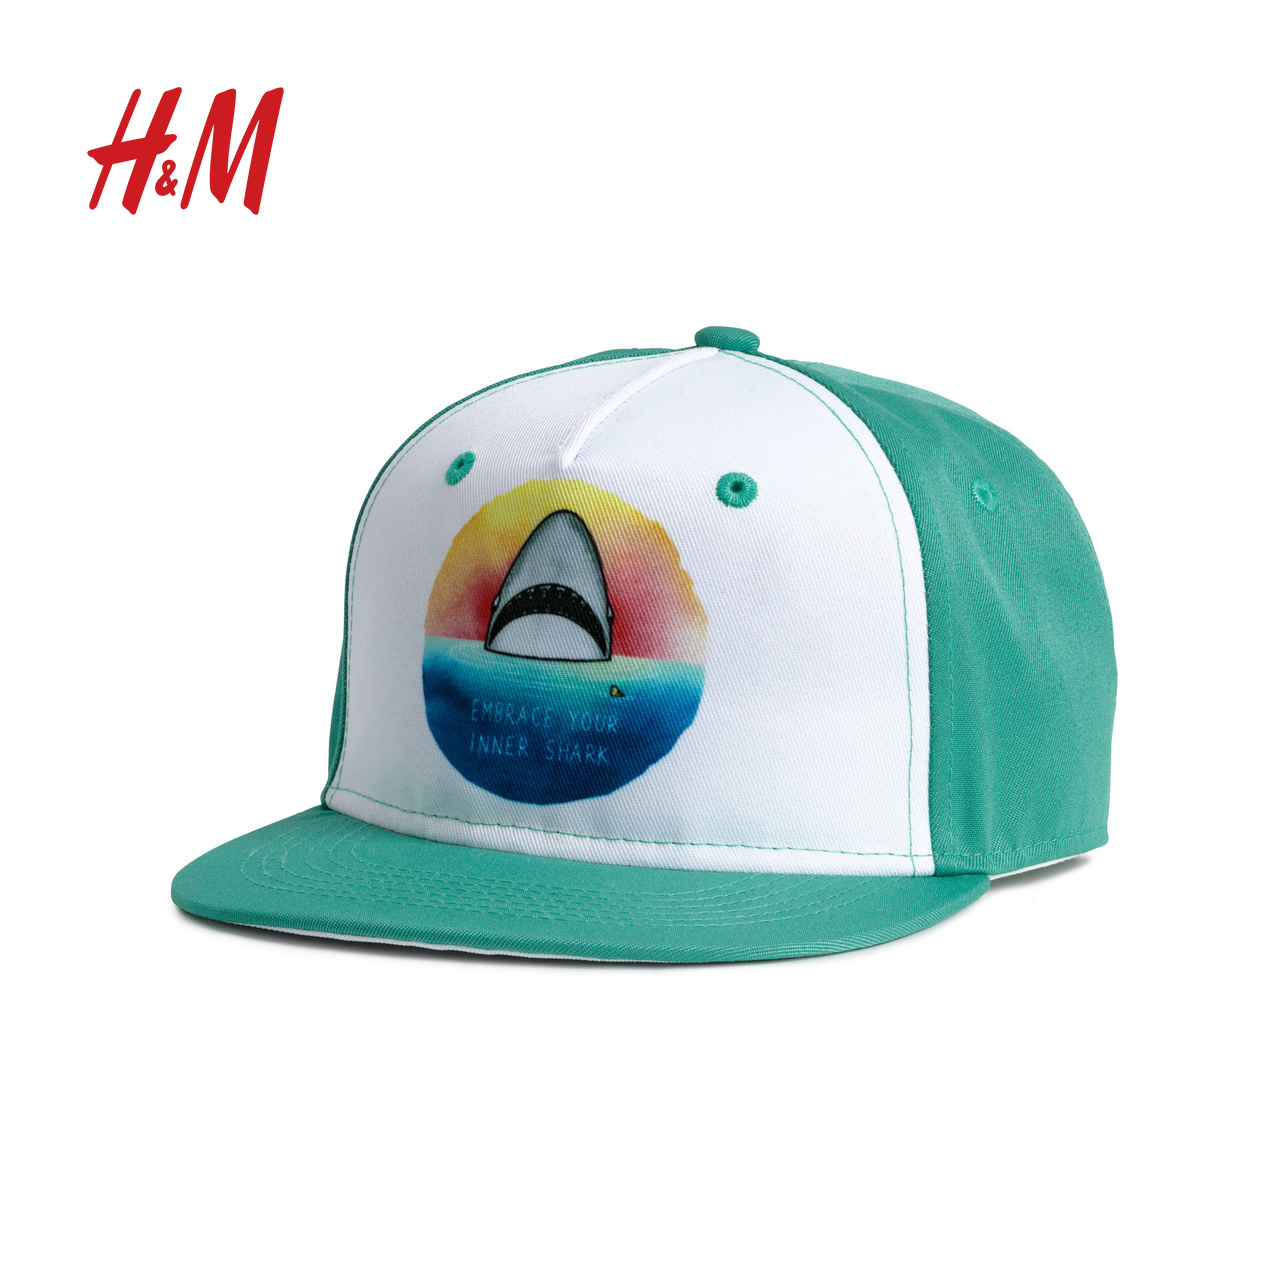 H&M HM0562150 男童帽子